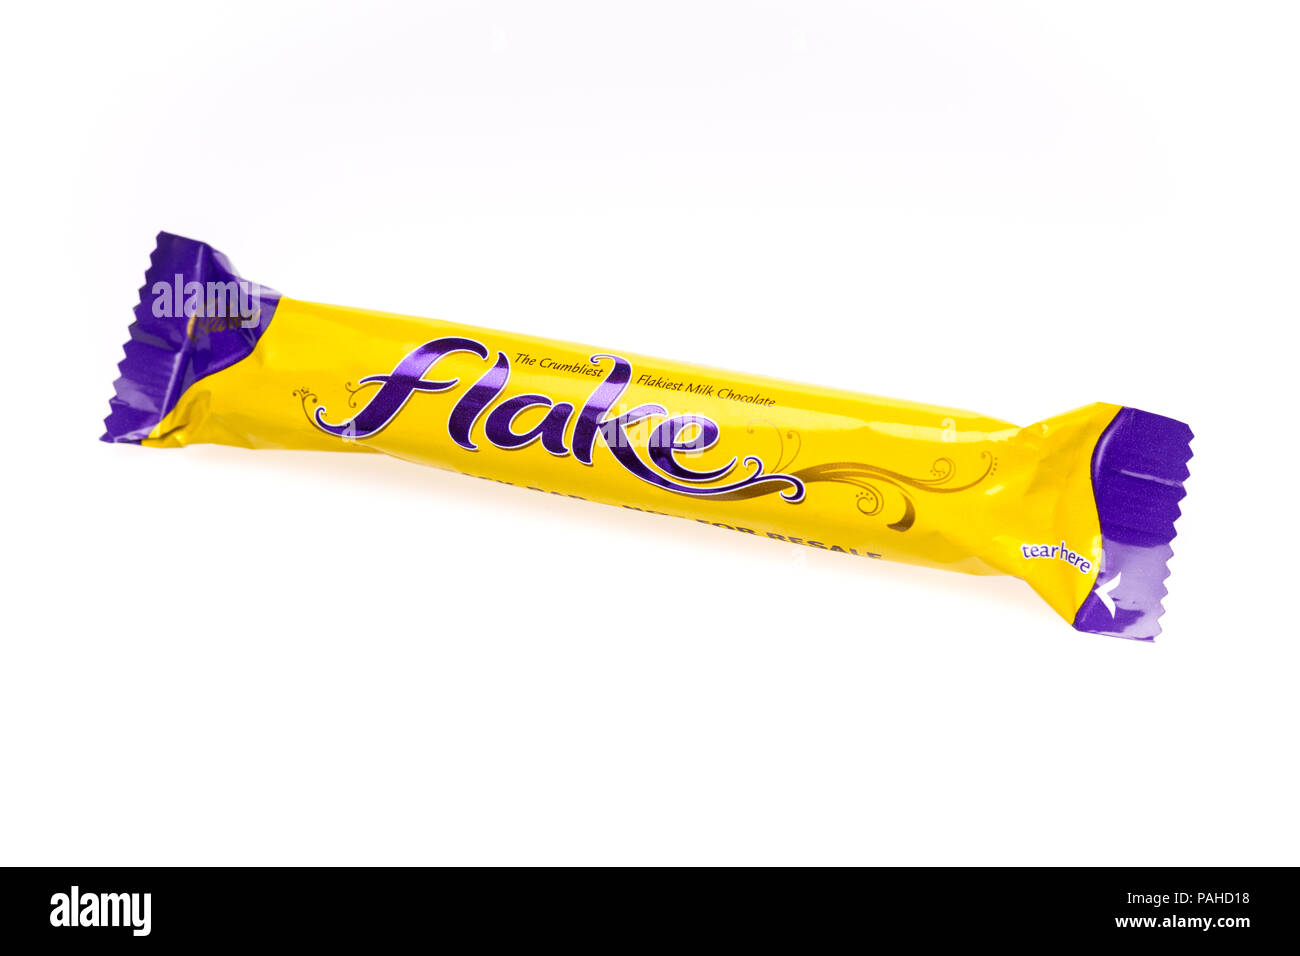 Cadbury Flake chocolate bar against a white background Stock Photo - Alamy